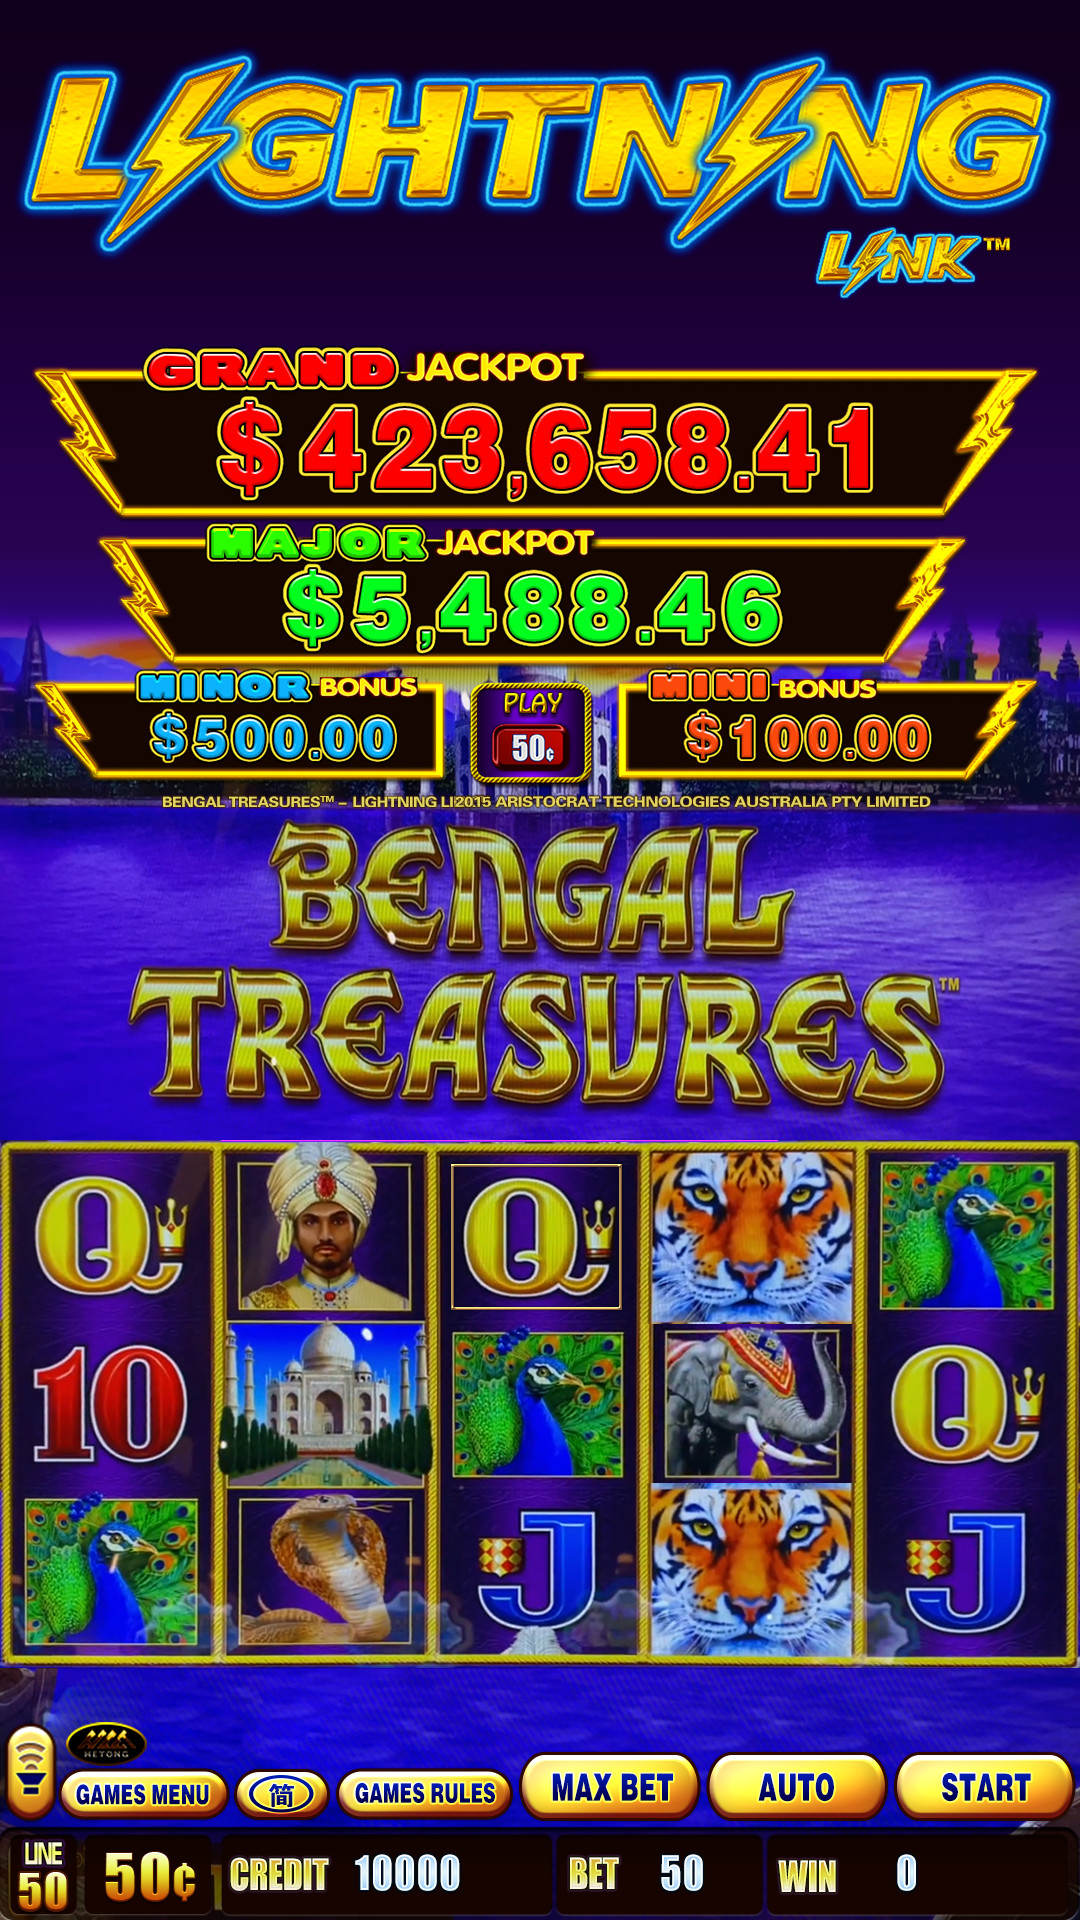 China SGS Dragon Theme Cash Coaster Casino Slot Game Machine 43&quot; Screen wholesale